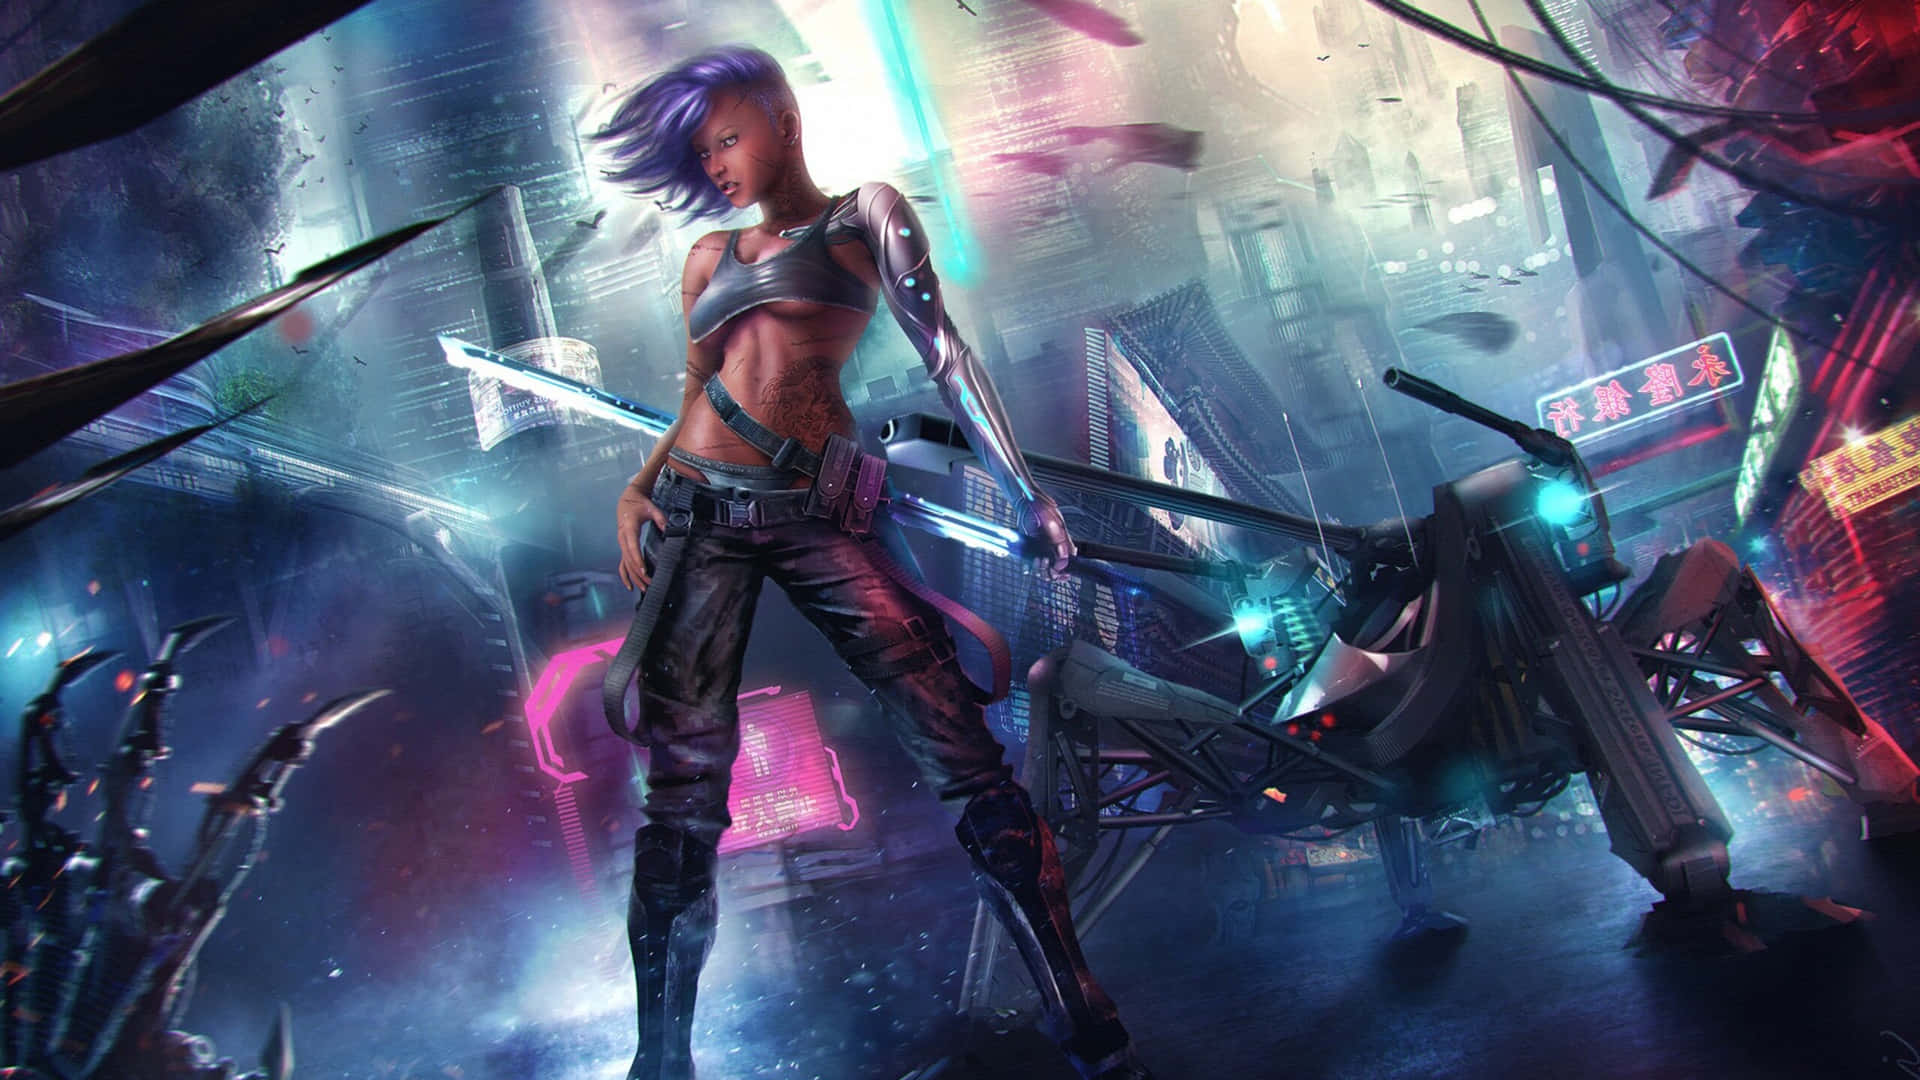 “experience A High-tech Adventure In A Cyberpunk World” Background